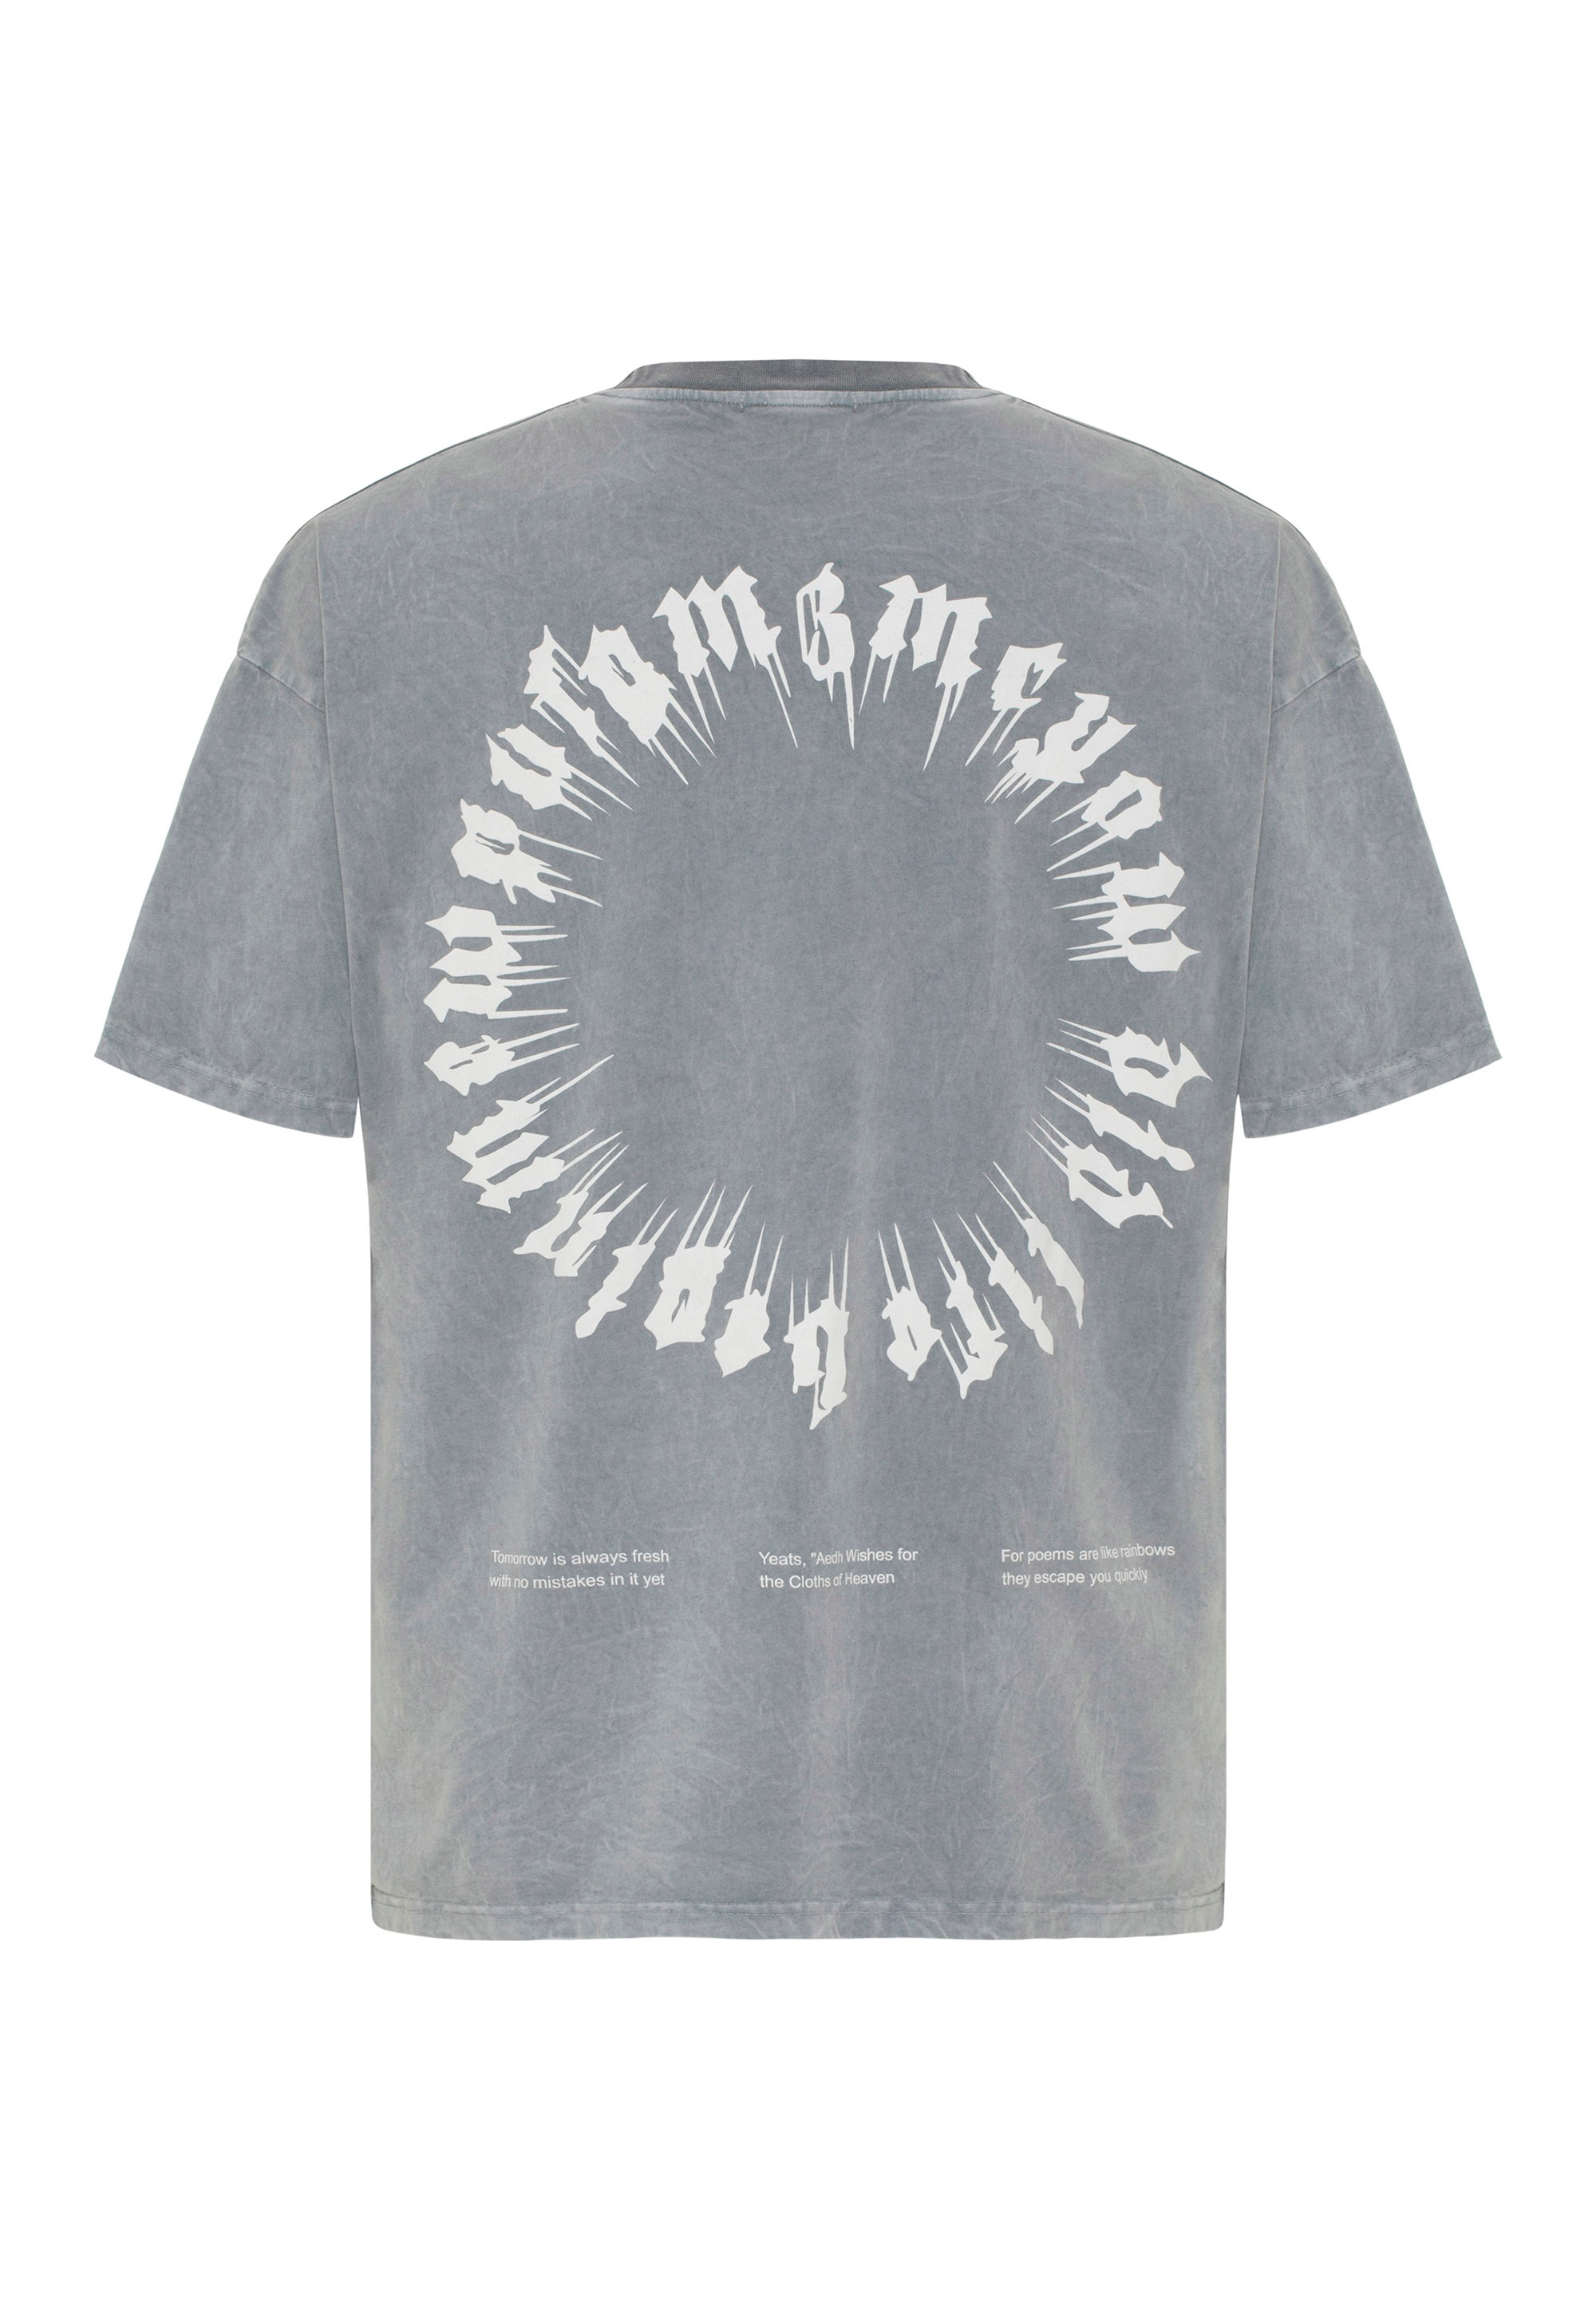 RedBridge T-Shirt »Runcorn«, mit großflächigem Print auf dem Rücken